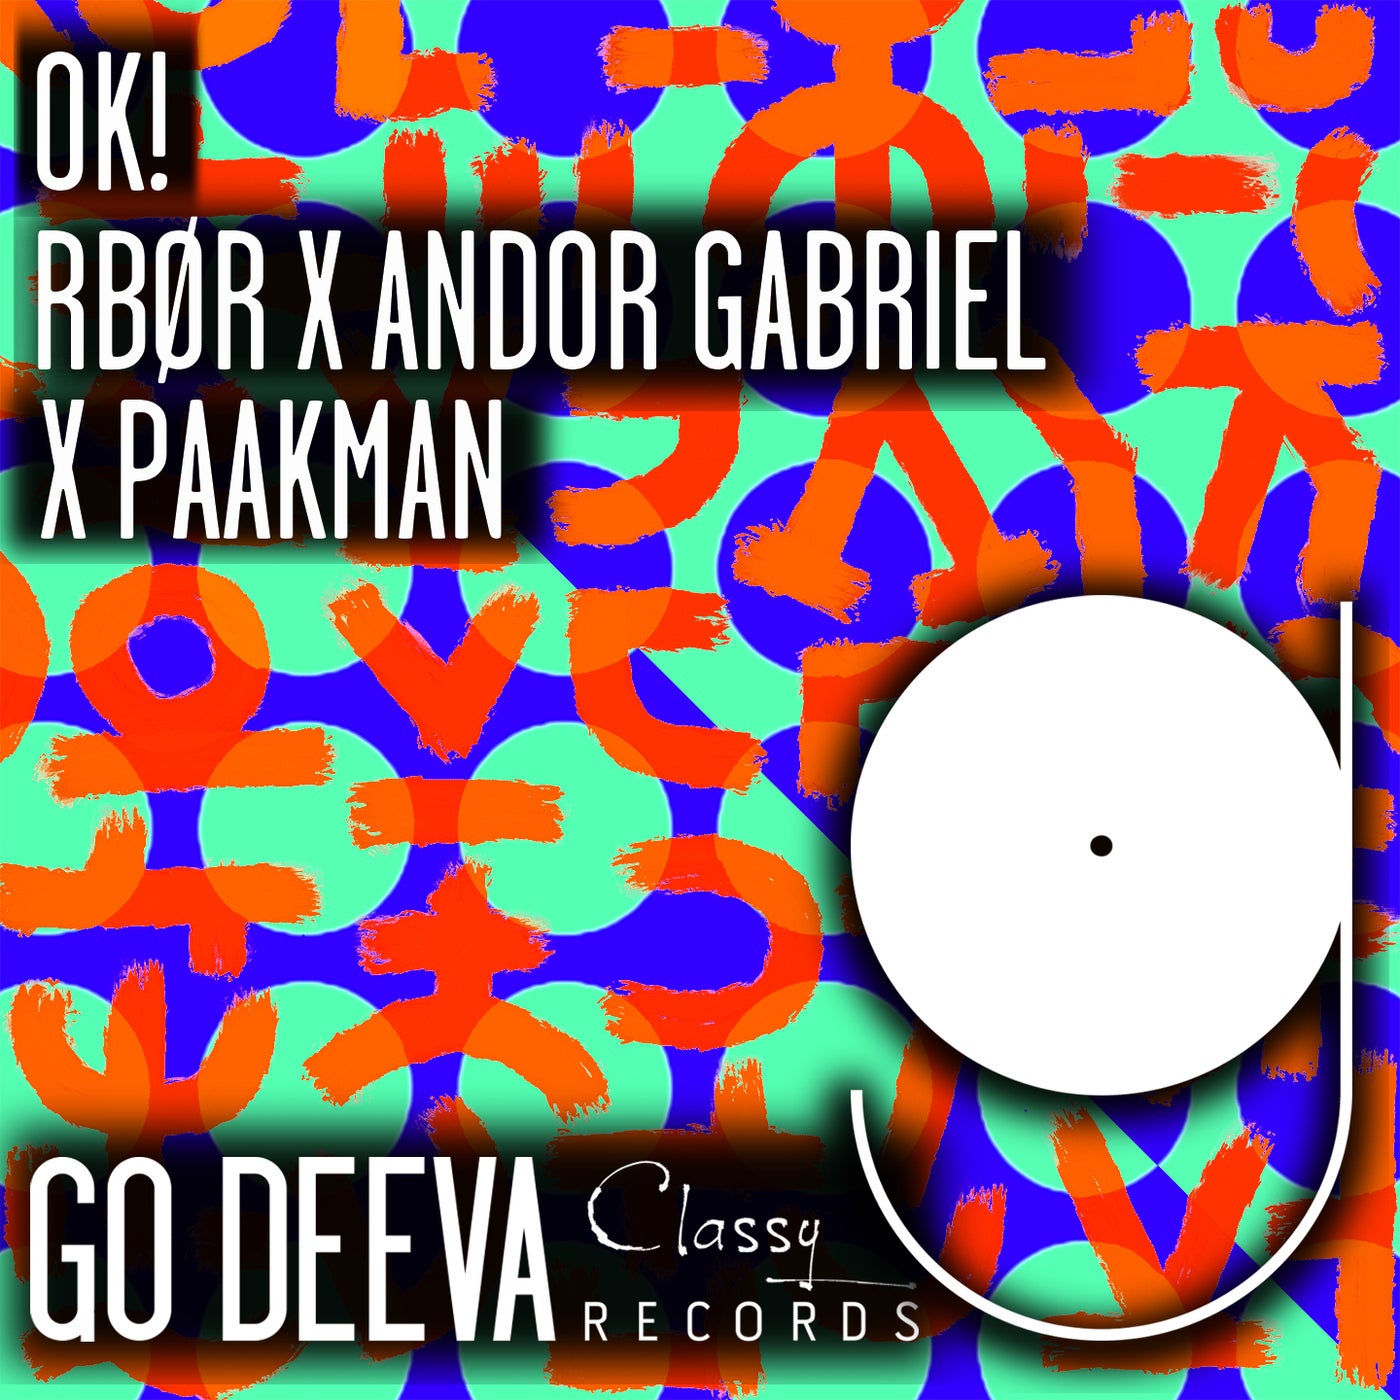 image cover: Andor Gabriel, RBØR, Paakman - OK! on Go Deeva Records